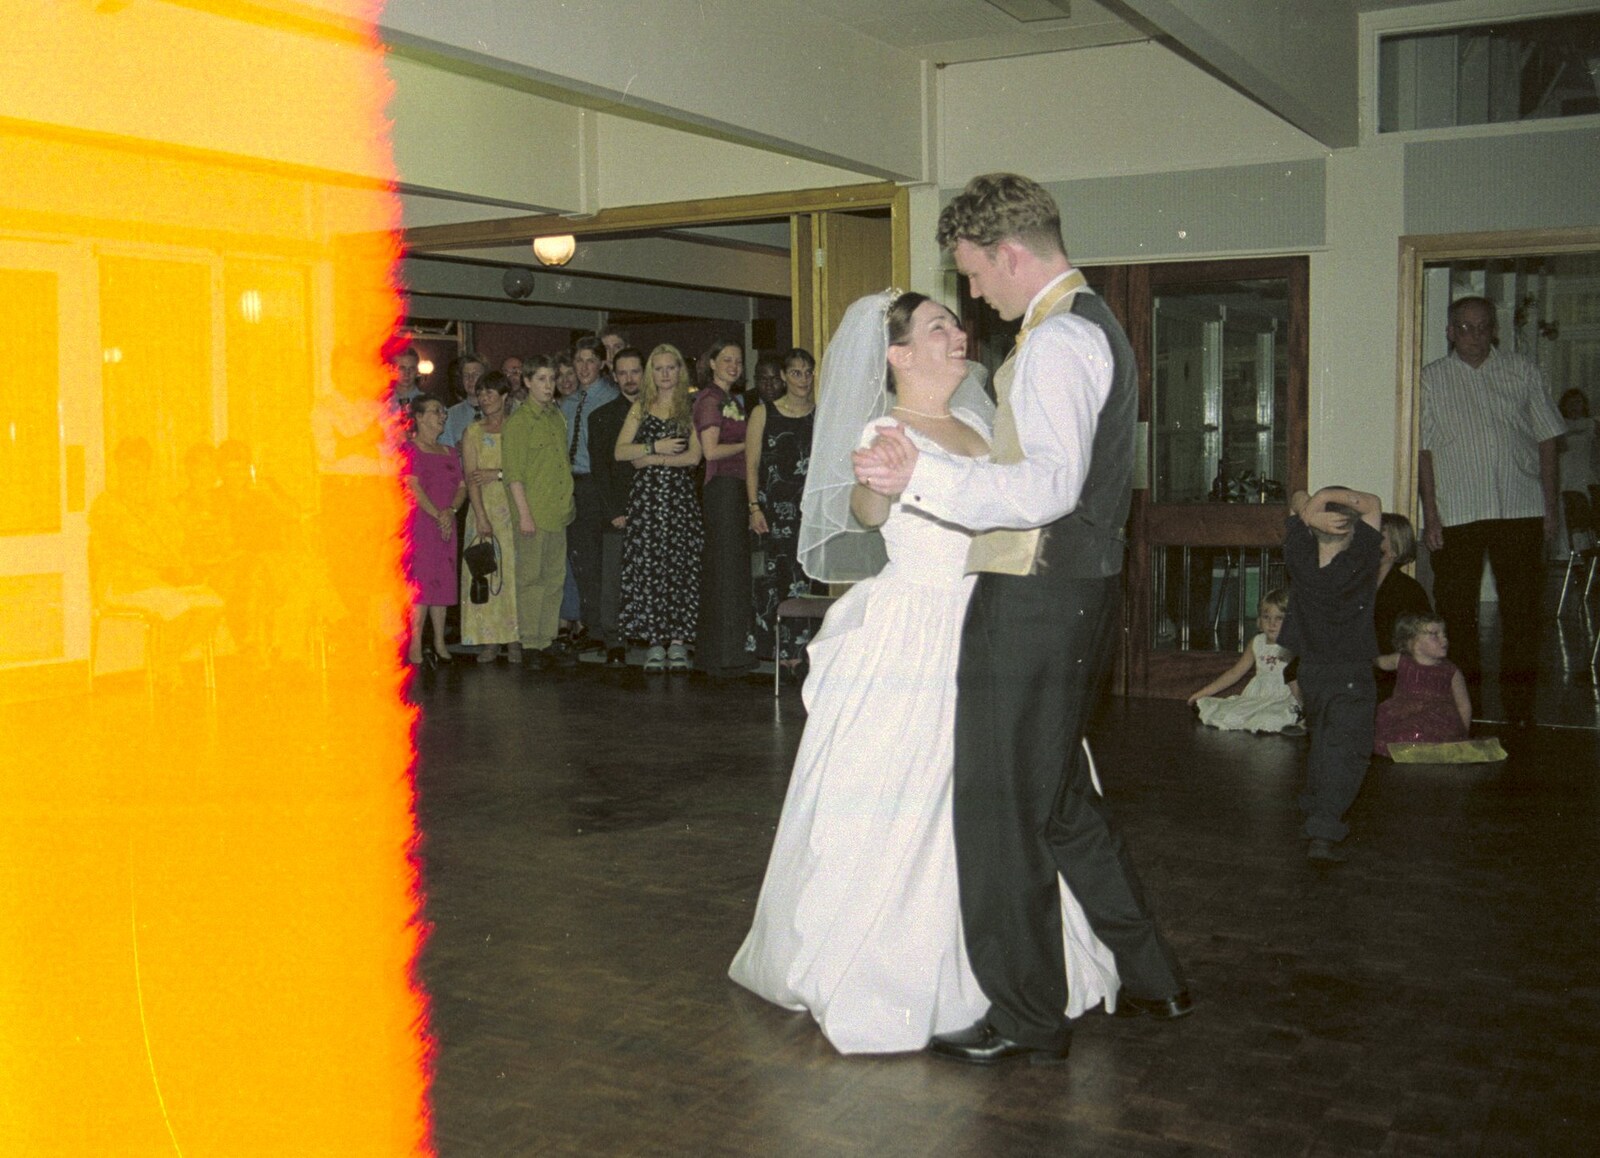 The first dance from Joe and Lesley's CISU Wedding, Ipswich, Suffolk - 30th July 1998